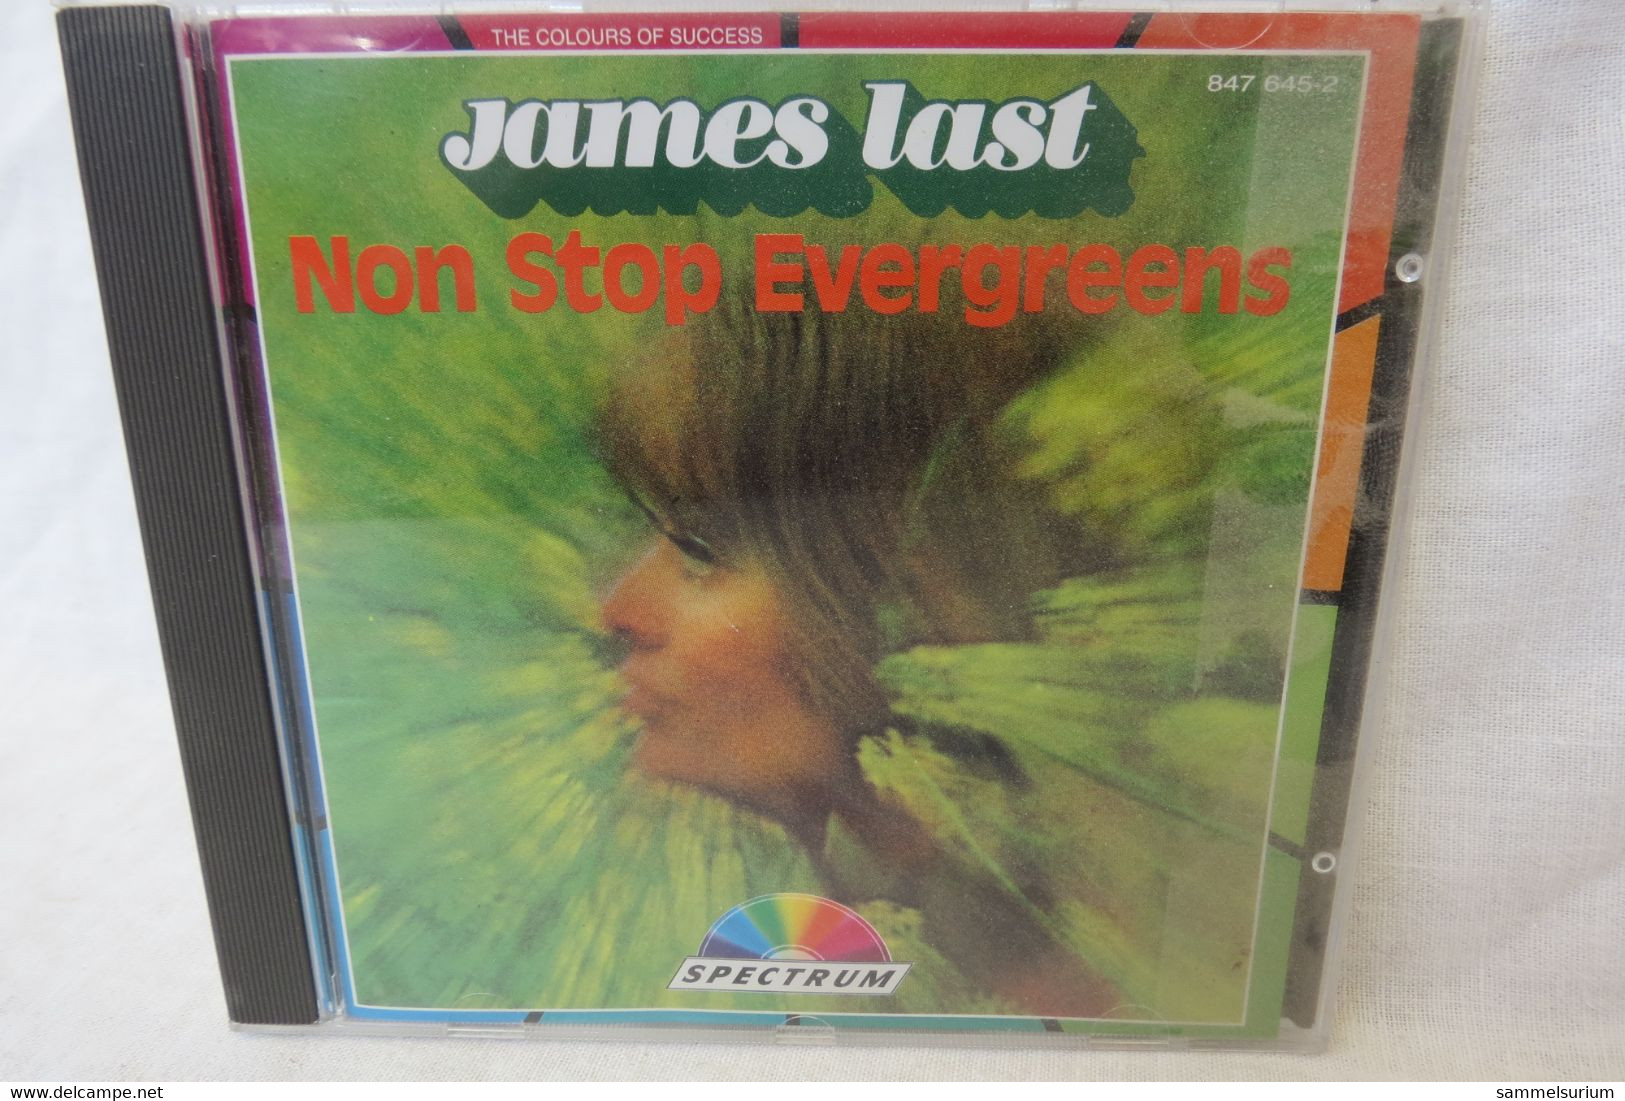 CD "James Last" Non Stop Evergreen - Strumentali